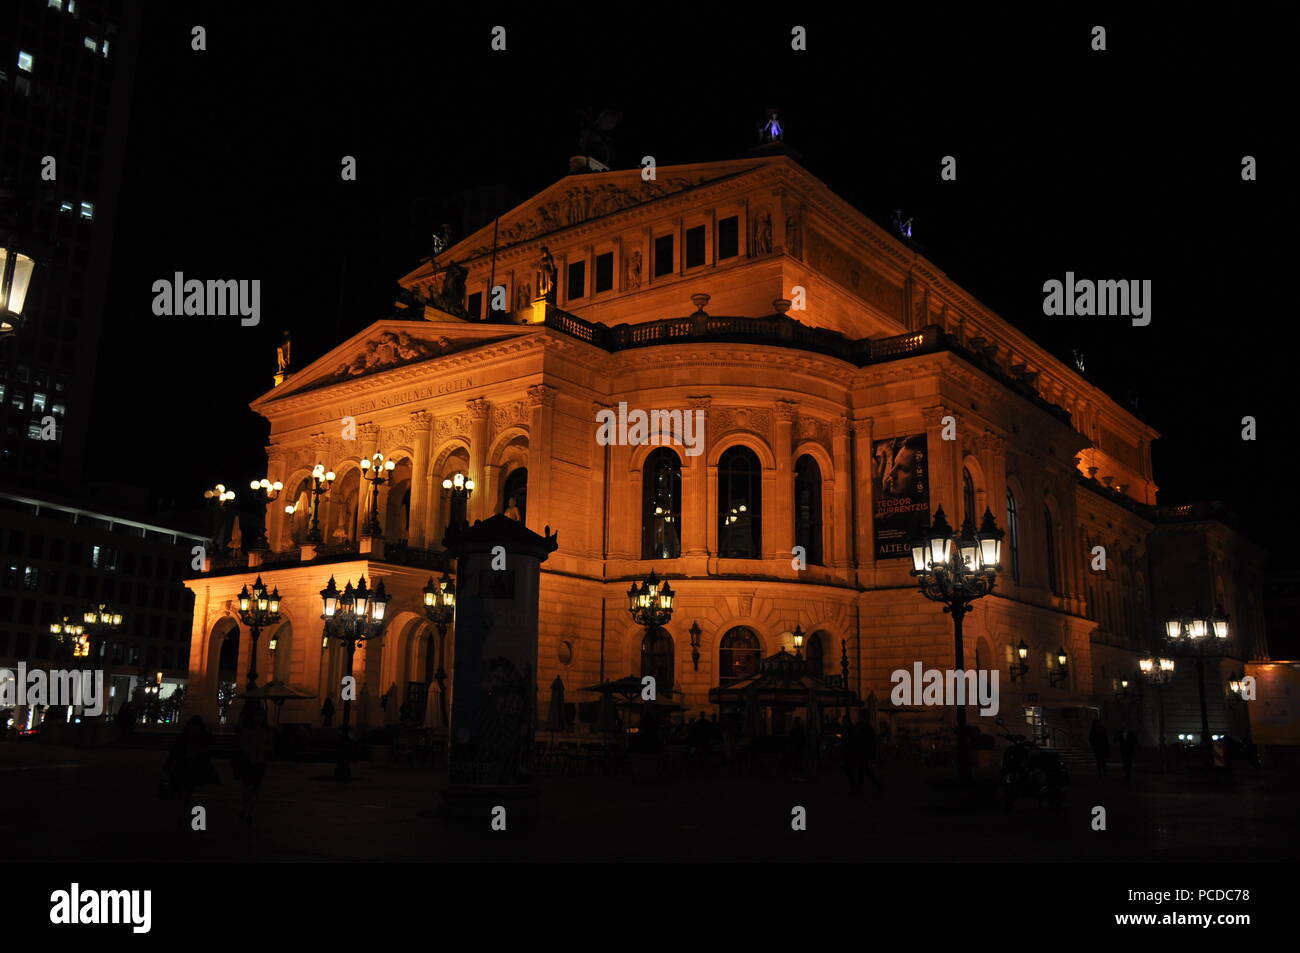 Old Opera House (Alte Oper) by night, Frankfurt am Main, Germany Stock Photo